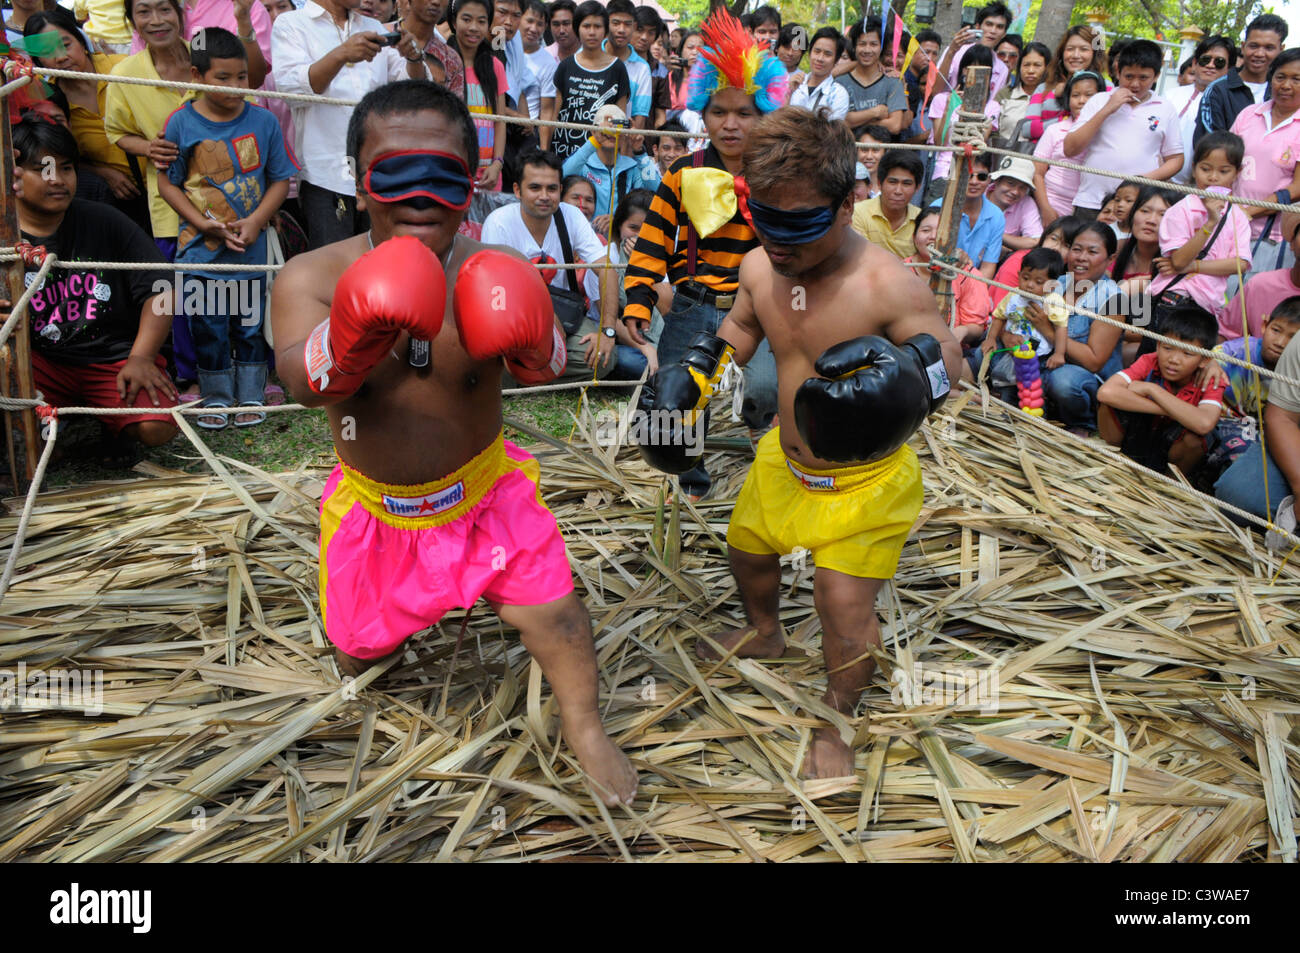 Dwarf kick bokers fighting blindfold, crazy sport during kings birthday celebrations, suan luang rama 9 park, Bangkok, thailand Stock Photo